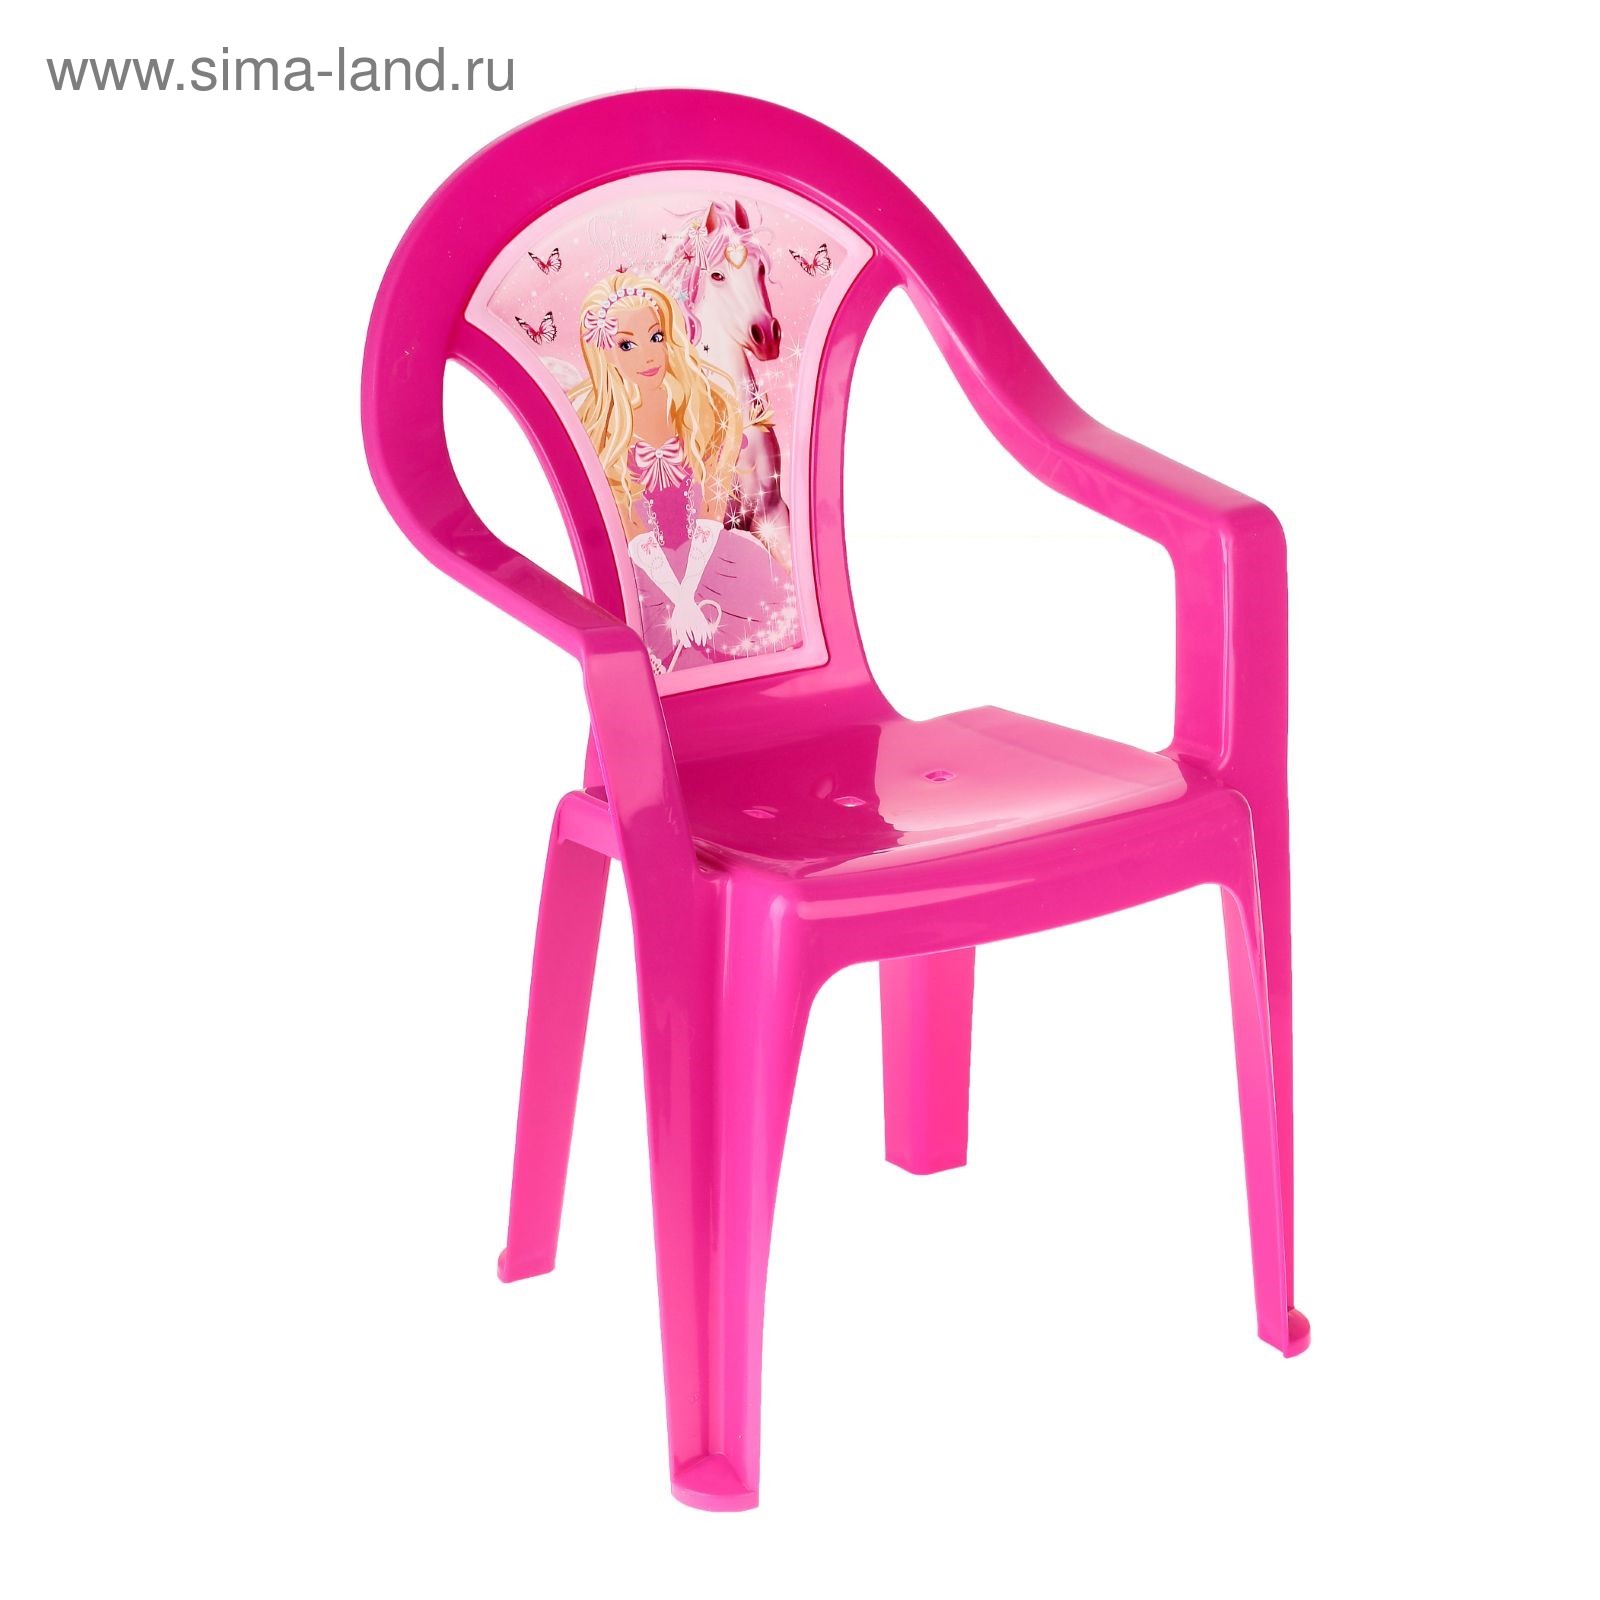 детское кресло сима ленд